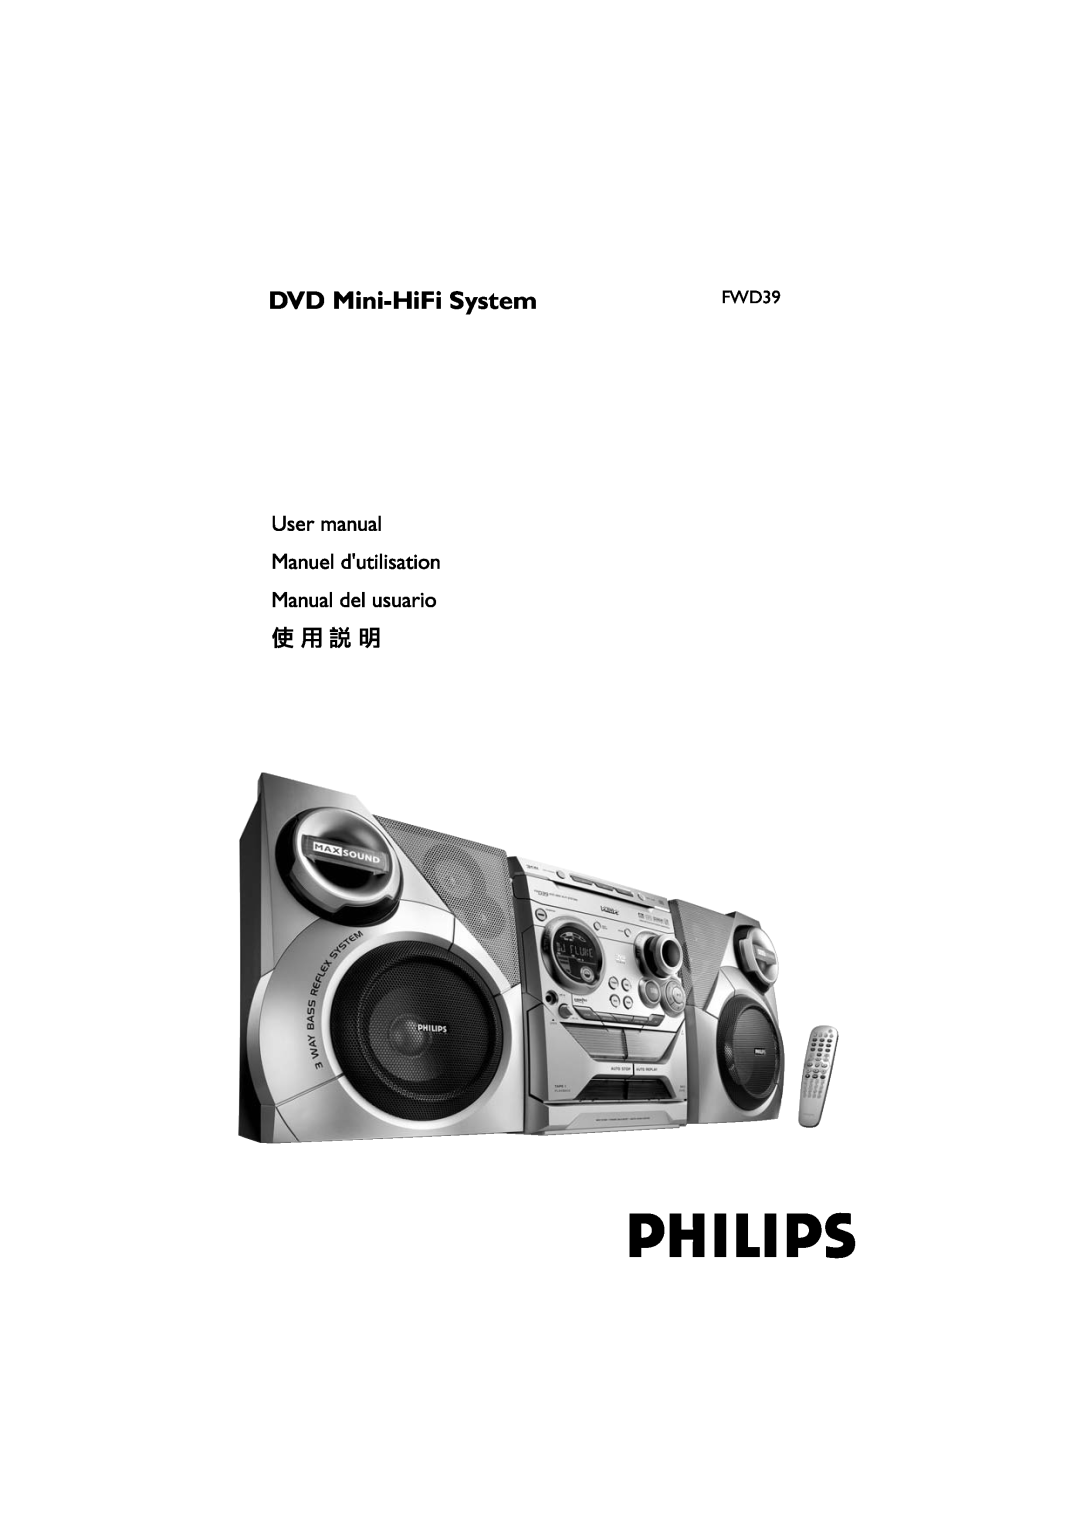 Philips FWD39 manual DVD Mini-HiFiSystem 